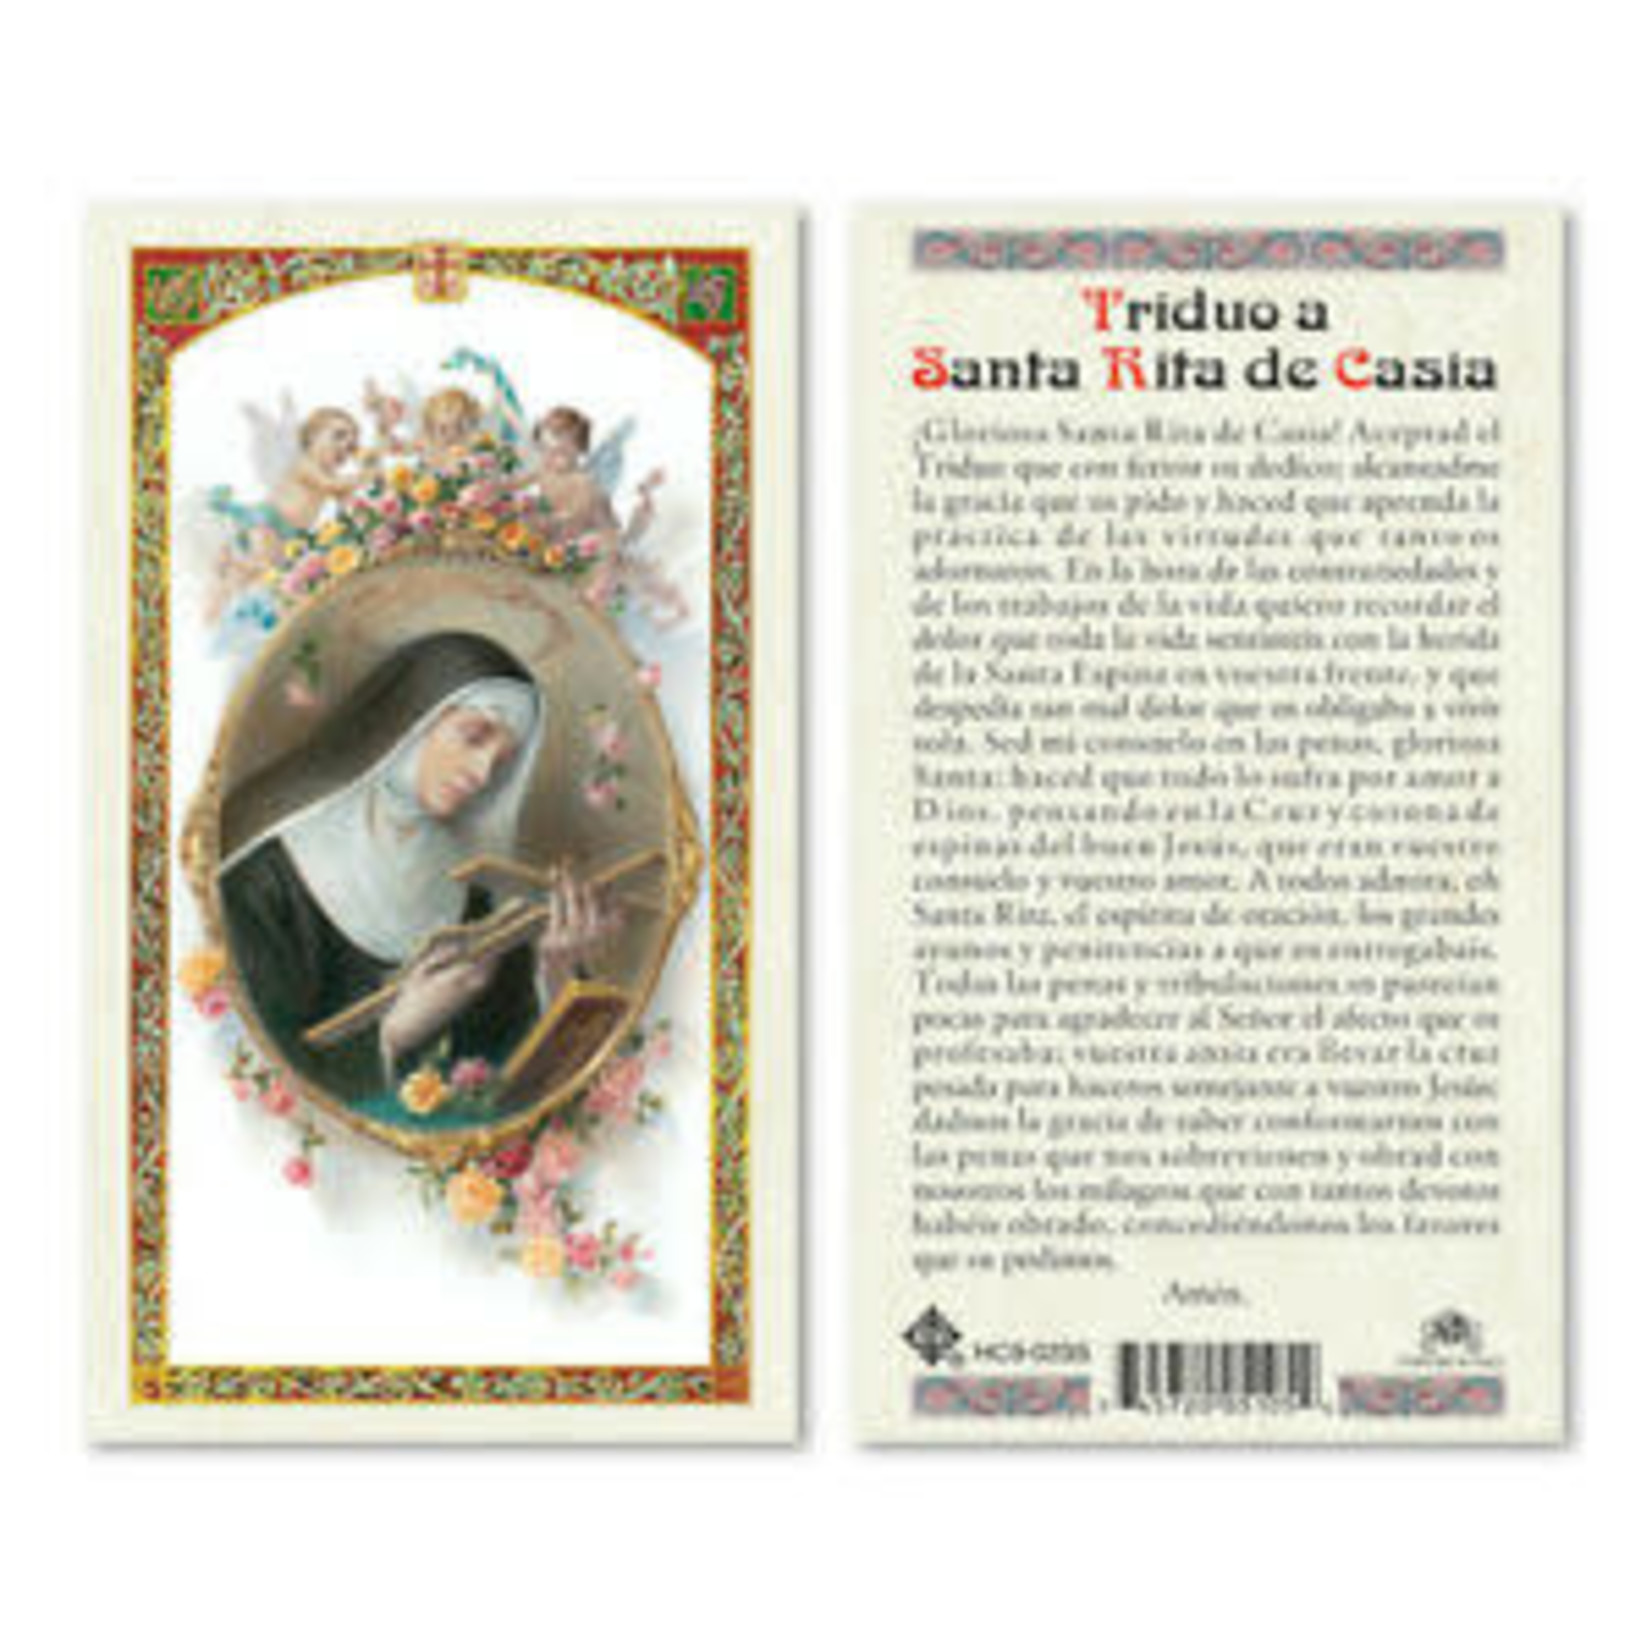 Triduo a Santa Rita de Casia Prayer Card (Spanish)